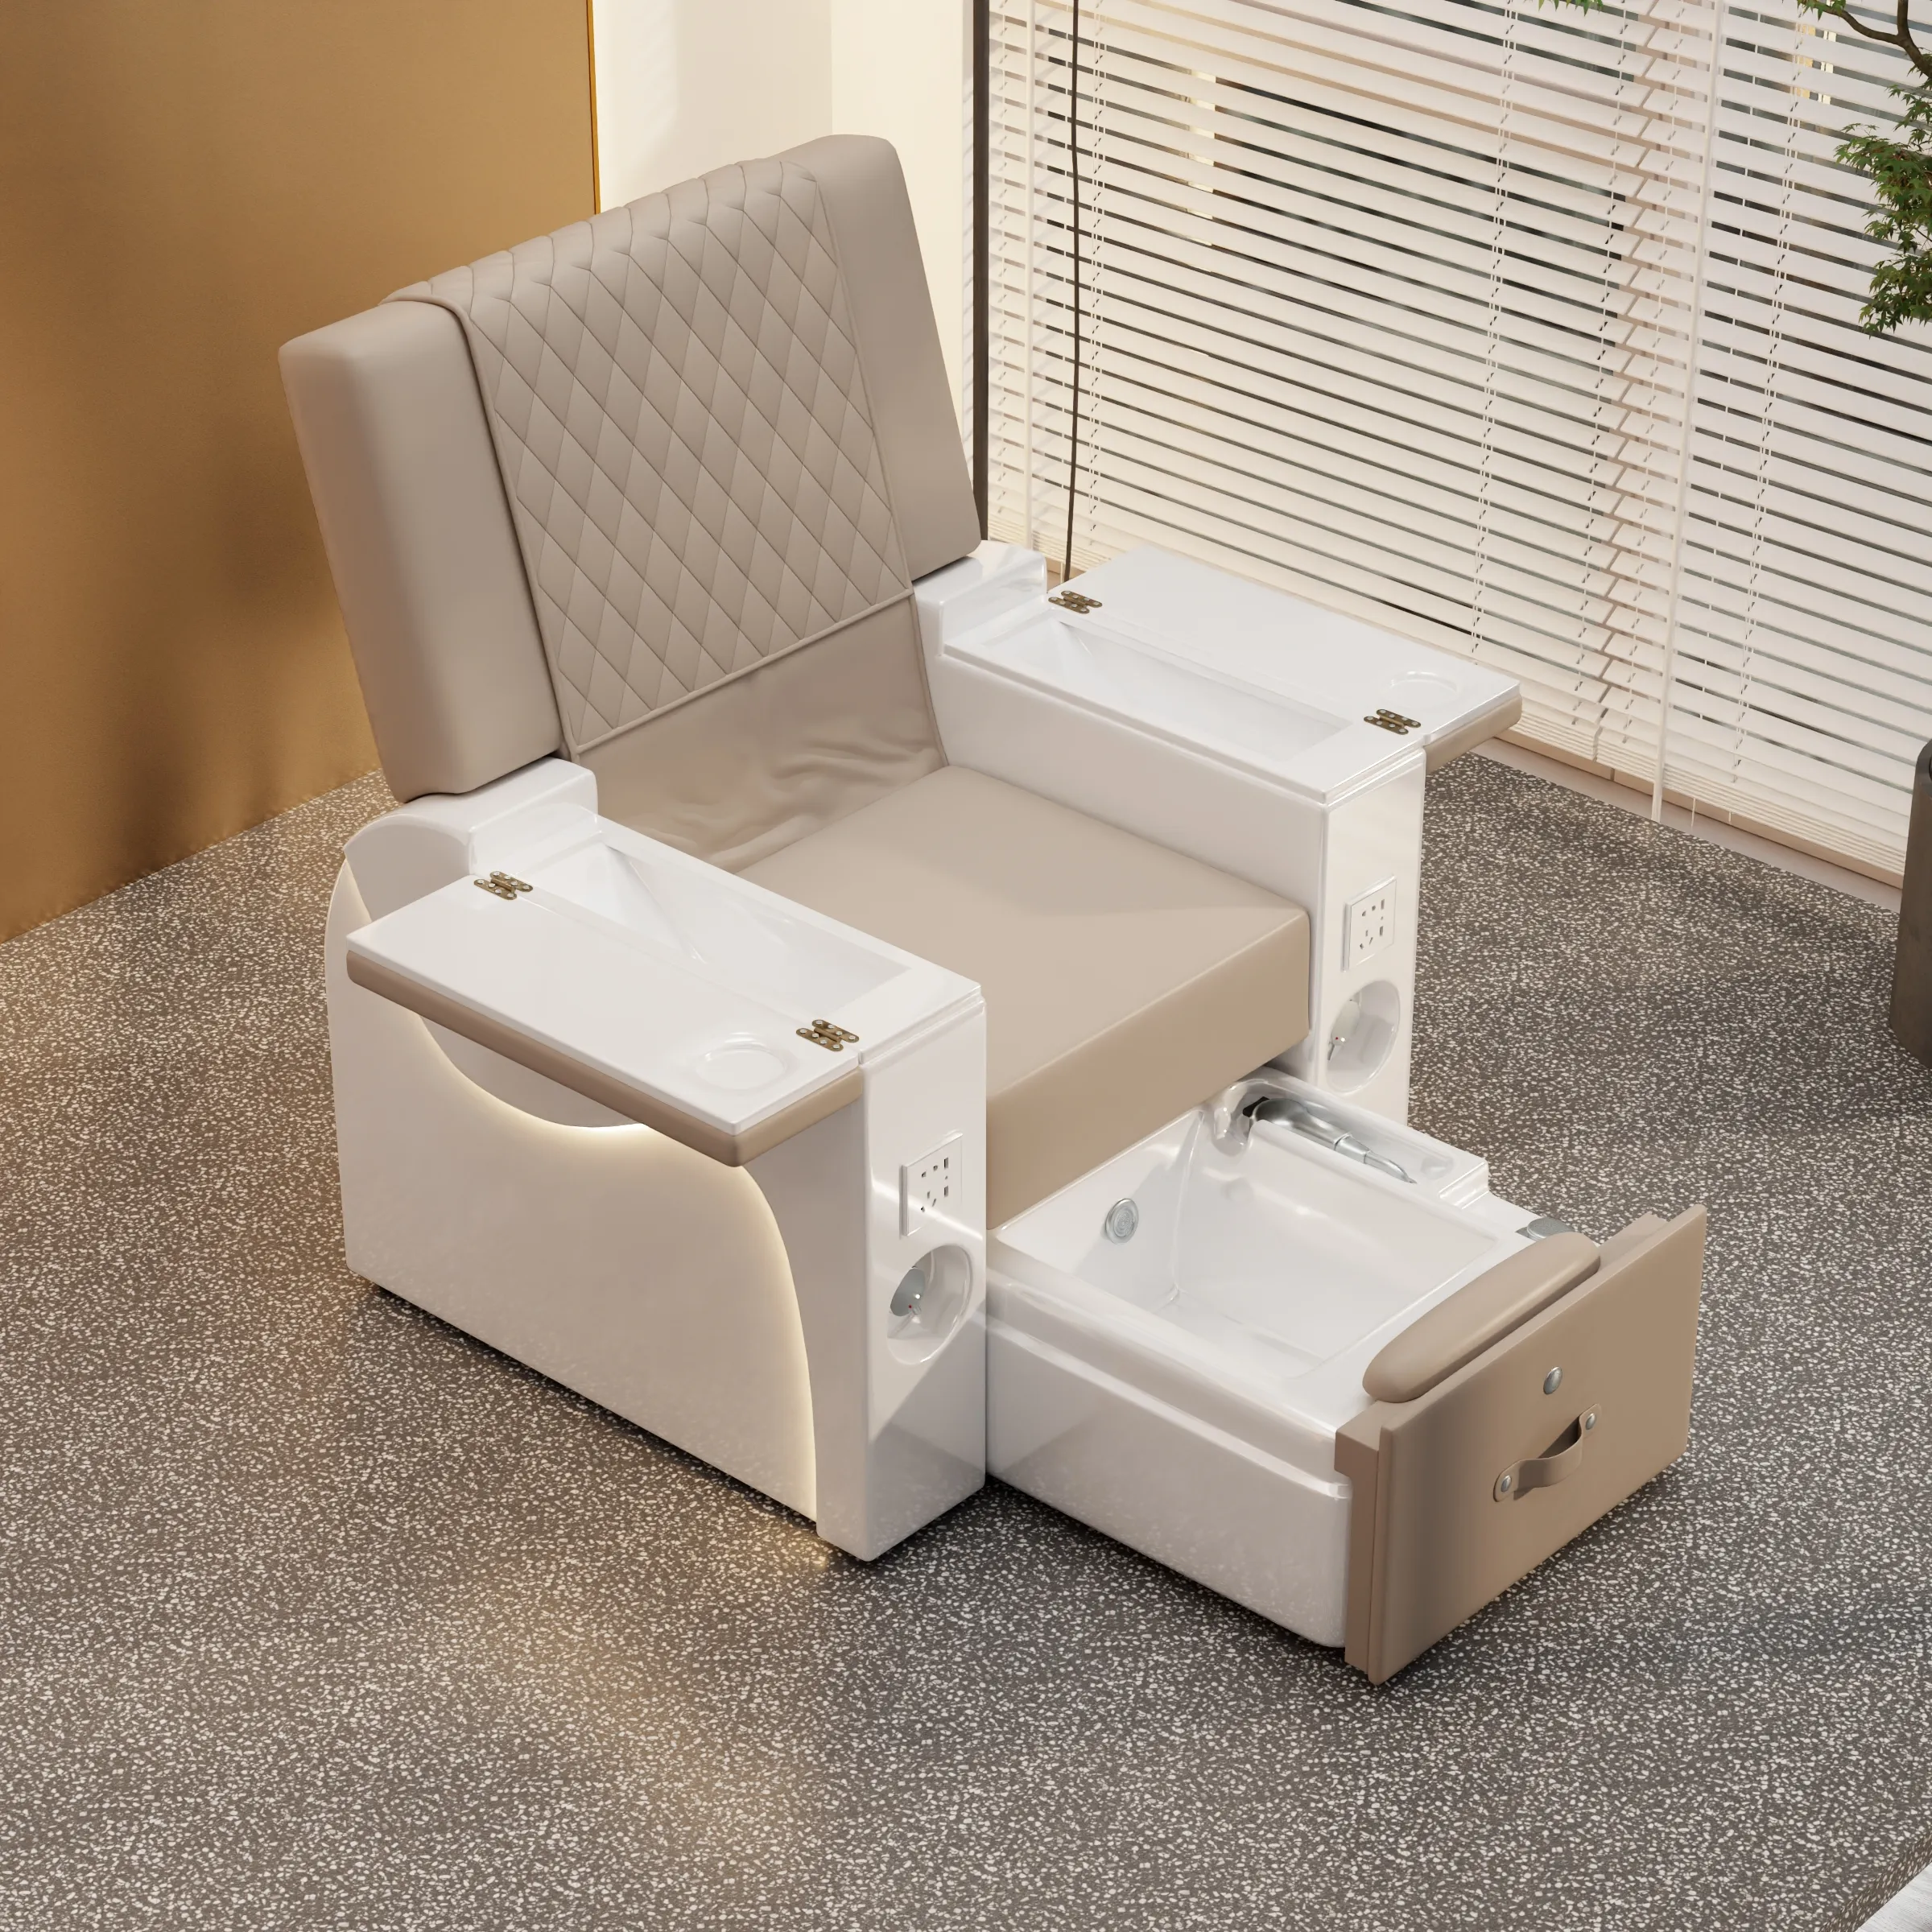 YaYou מכירה לוהטת חשמלי הפוך חזרה פדיקור כיסא עם led אור ודפוס עיצוב יכול אישית צבע רגל עיסוי כיסא